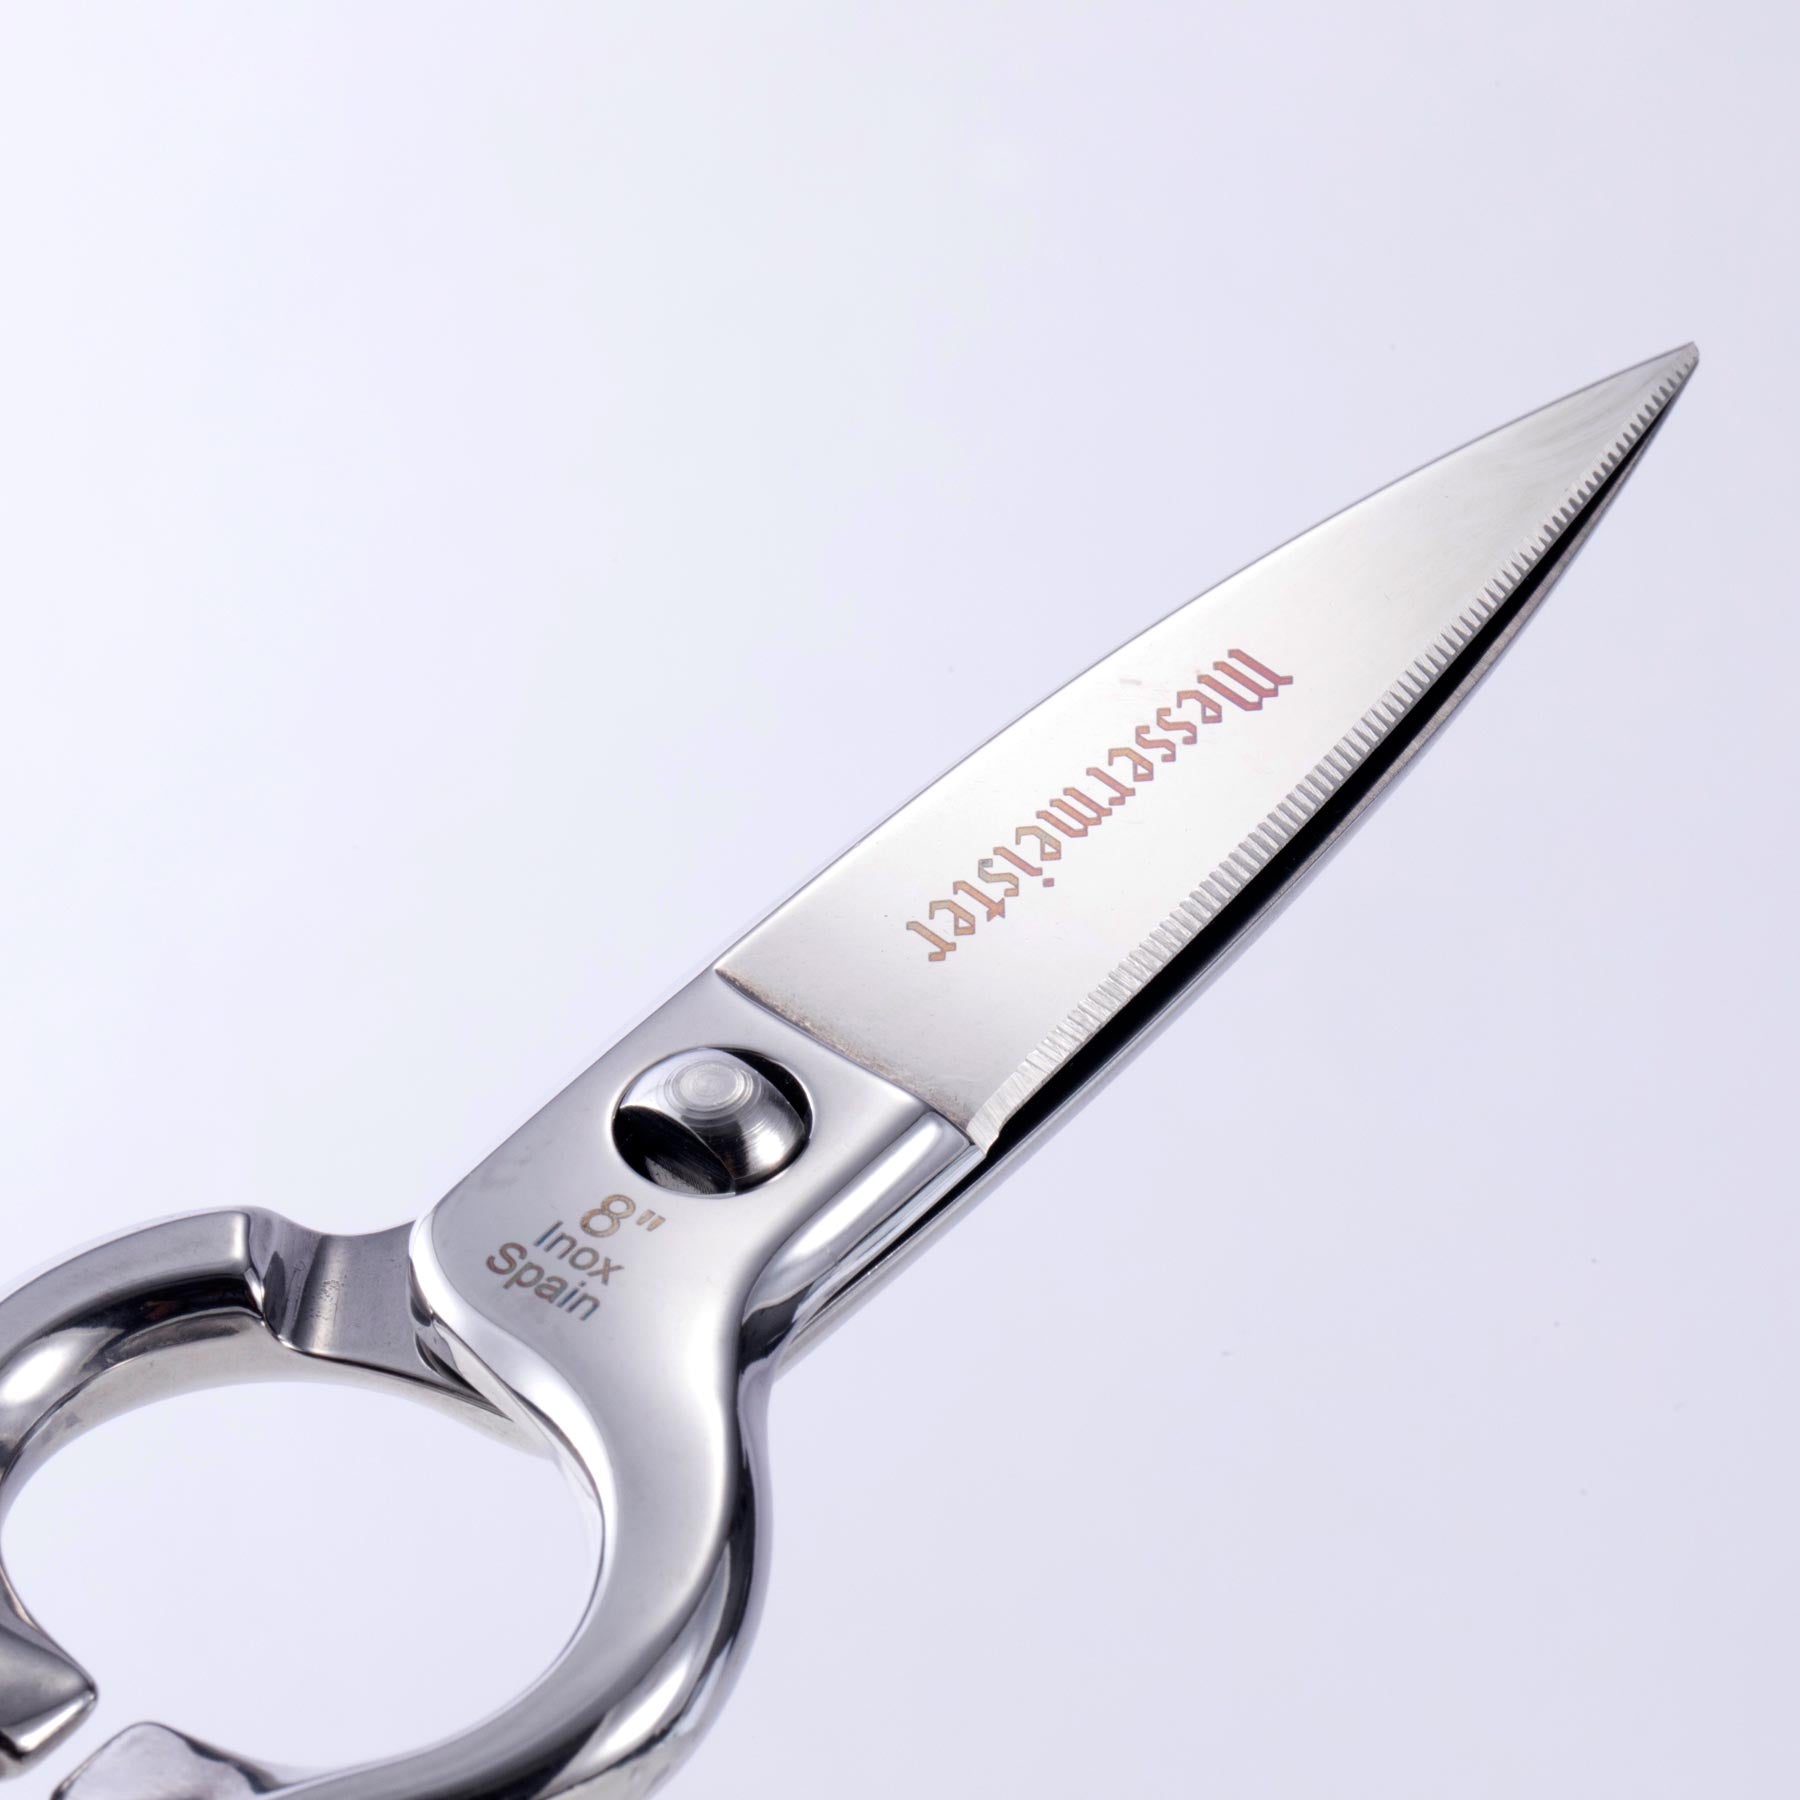 J.A. Henckels International Take-Apart Kitchen Scissors, Black/Stainless Steel, 3.375